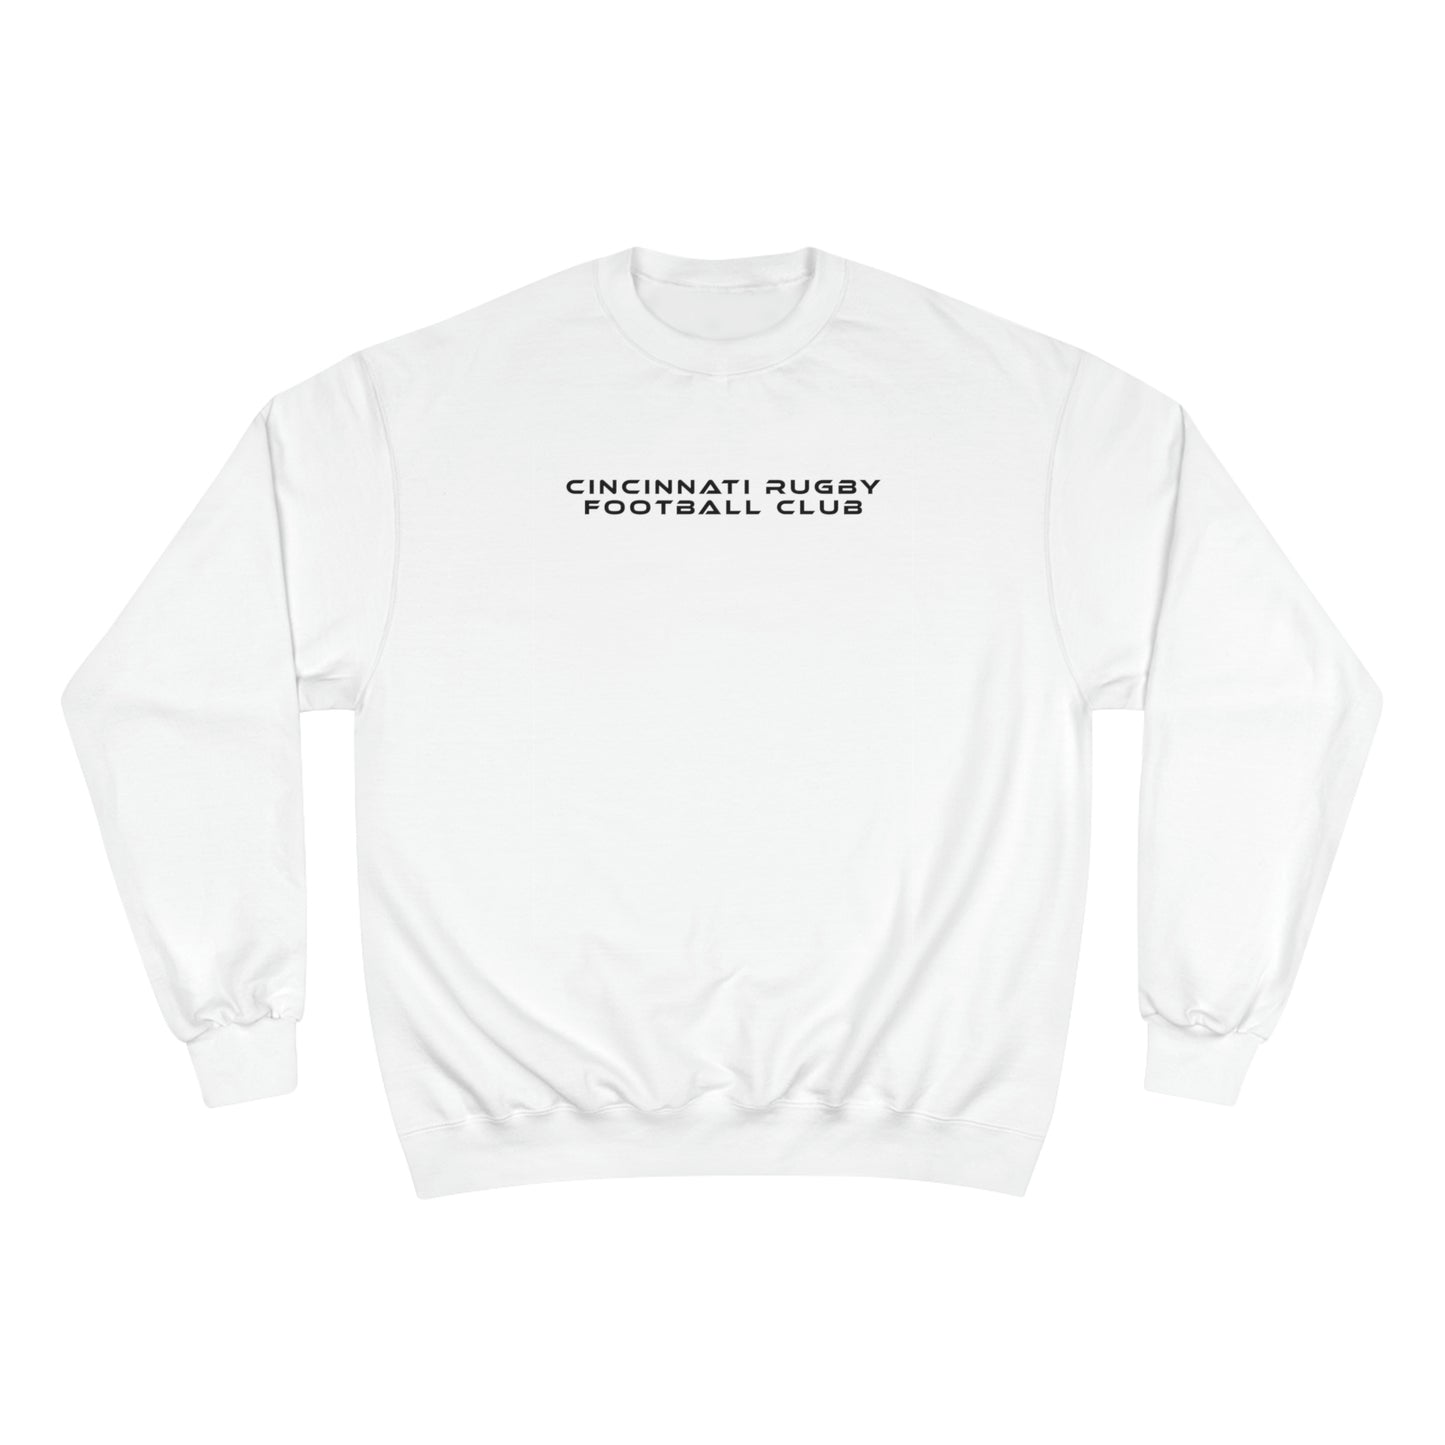 Champion Crewneck Sweatshirt | CRFC Wolfhounds White Crest